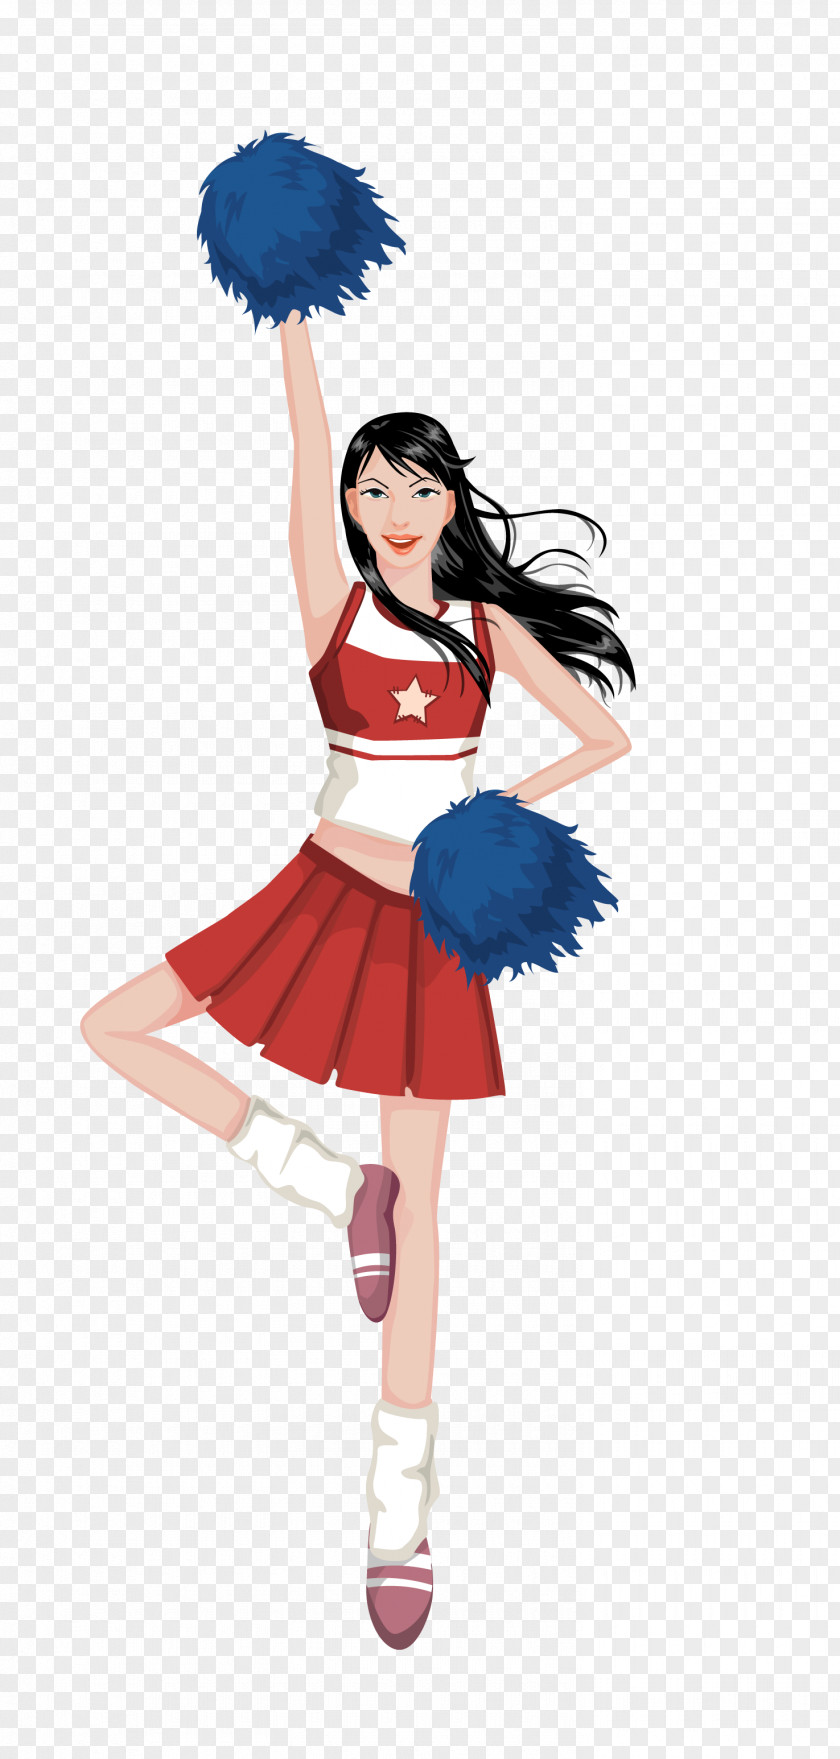 Cheerleaders Cartoon Cheerleader Illustration PNG